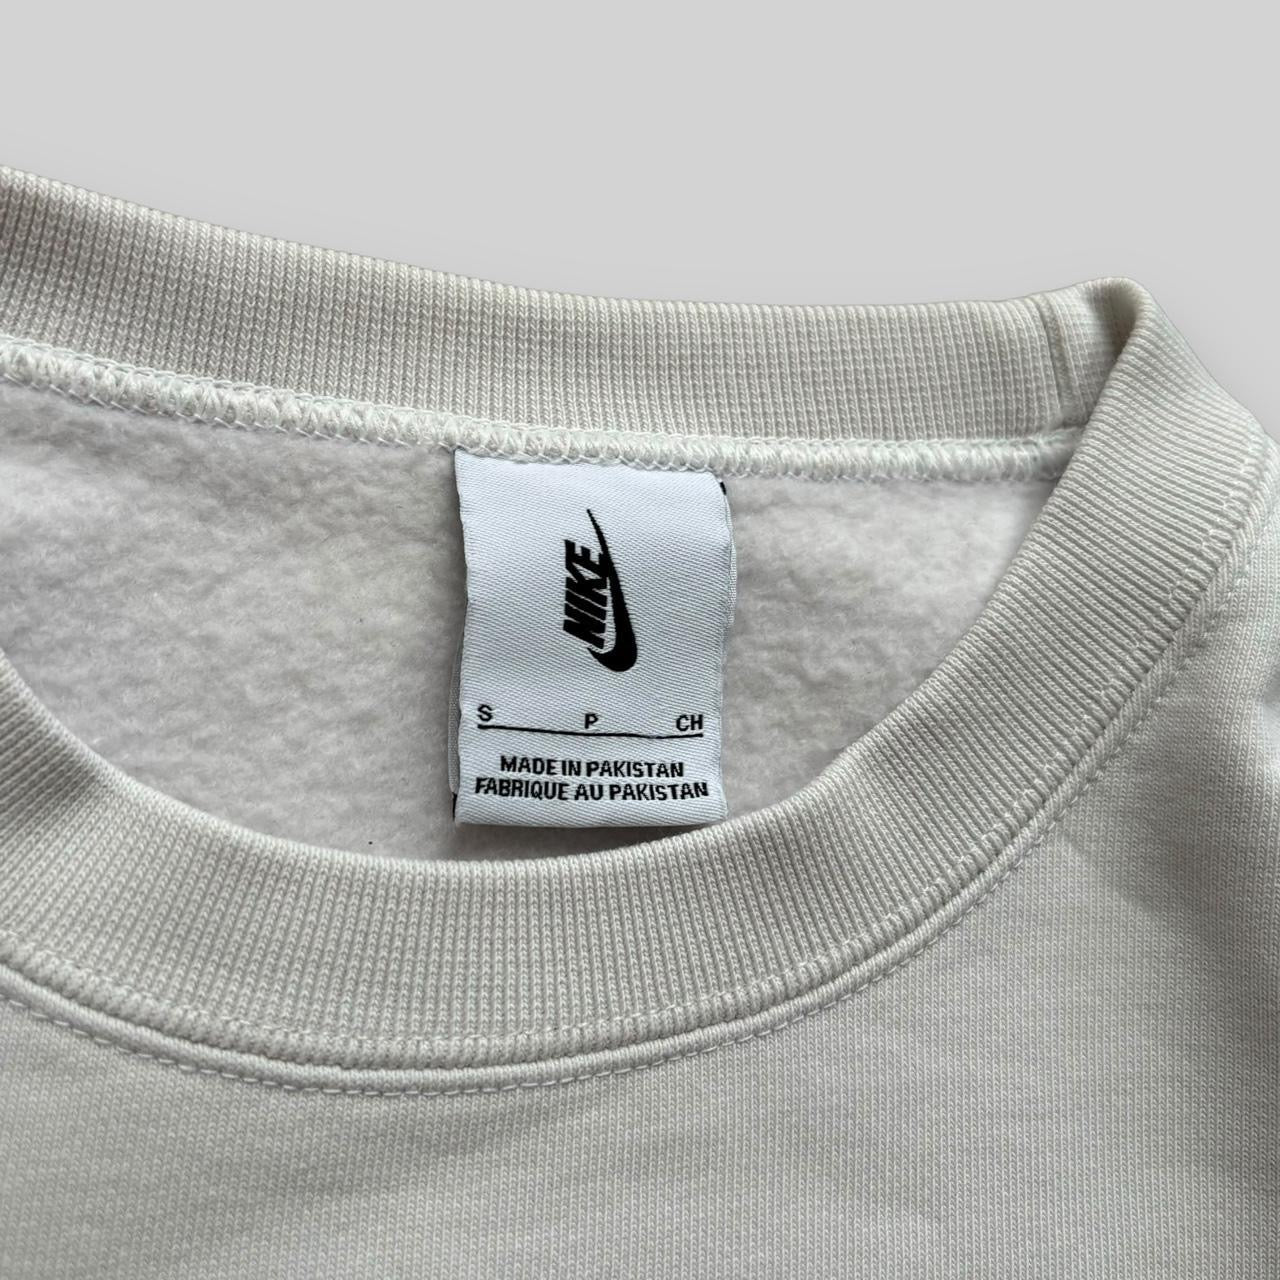 Nike NRG Single Swoosh Sweatshirt (Small)